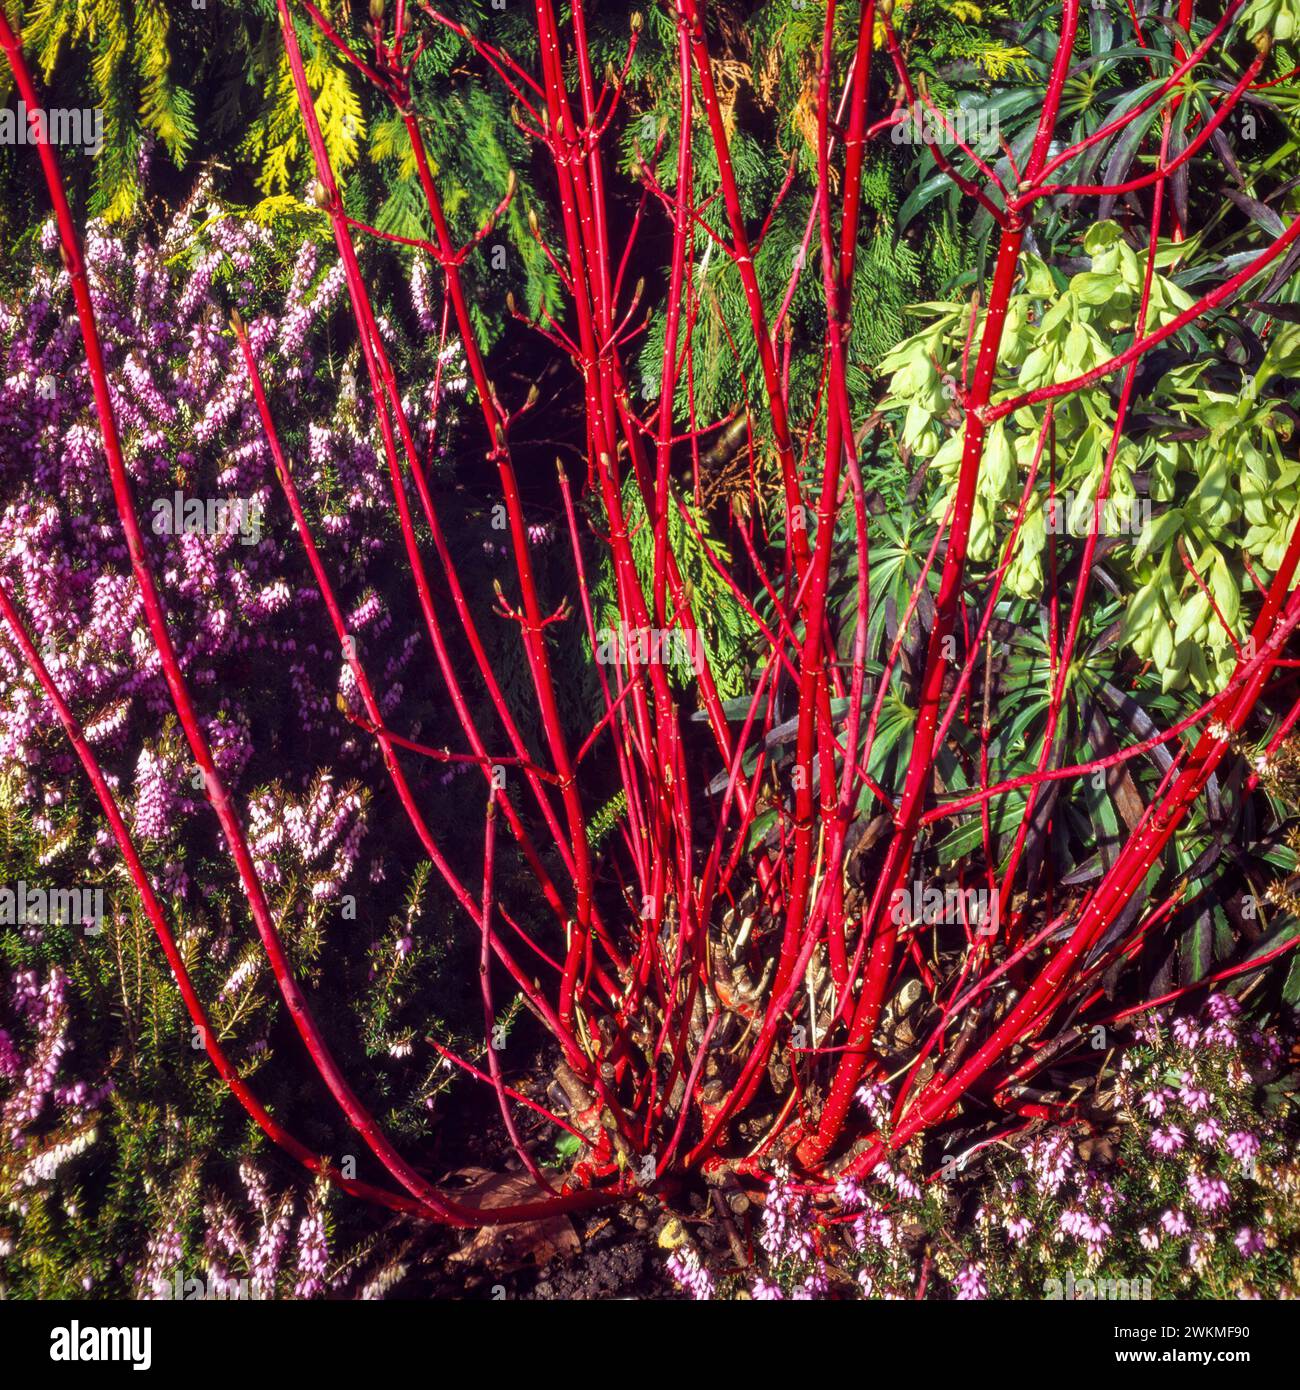 Brilliant red stems of Dogwood Cornus alba ‘Siberica’ with Erica x darleyensis ‘Furzey’ heather flowers growing in English garden border, England, UK Stock Photo